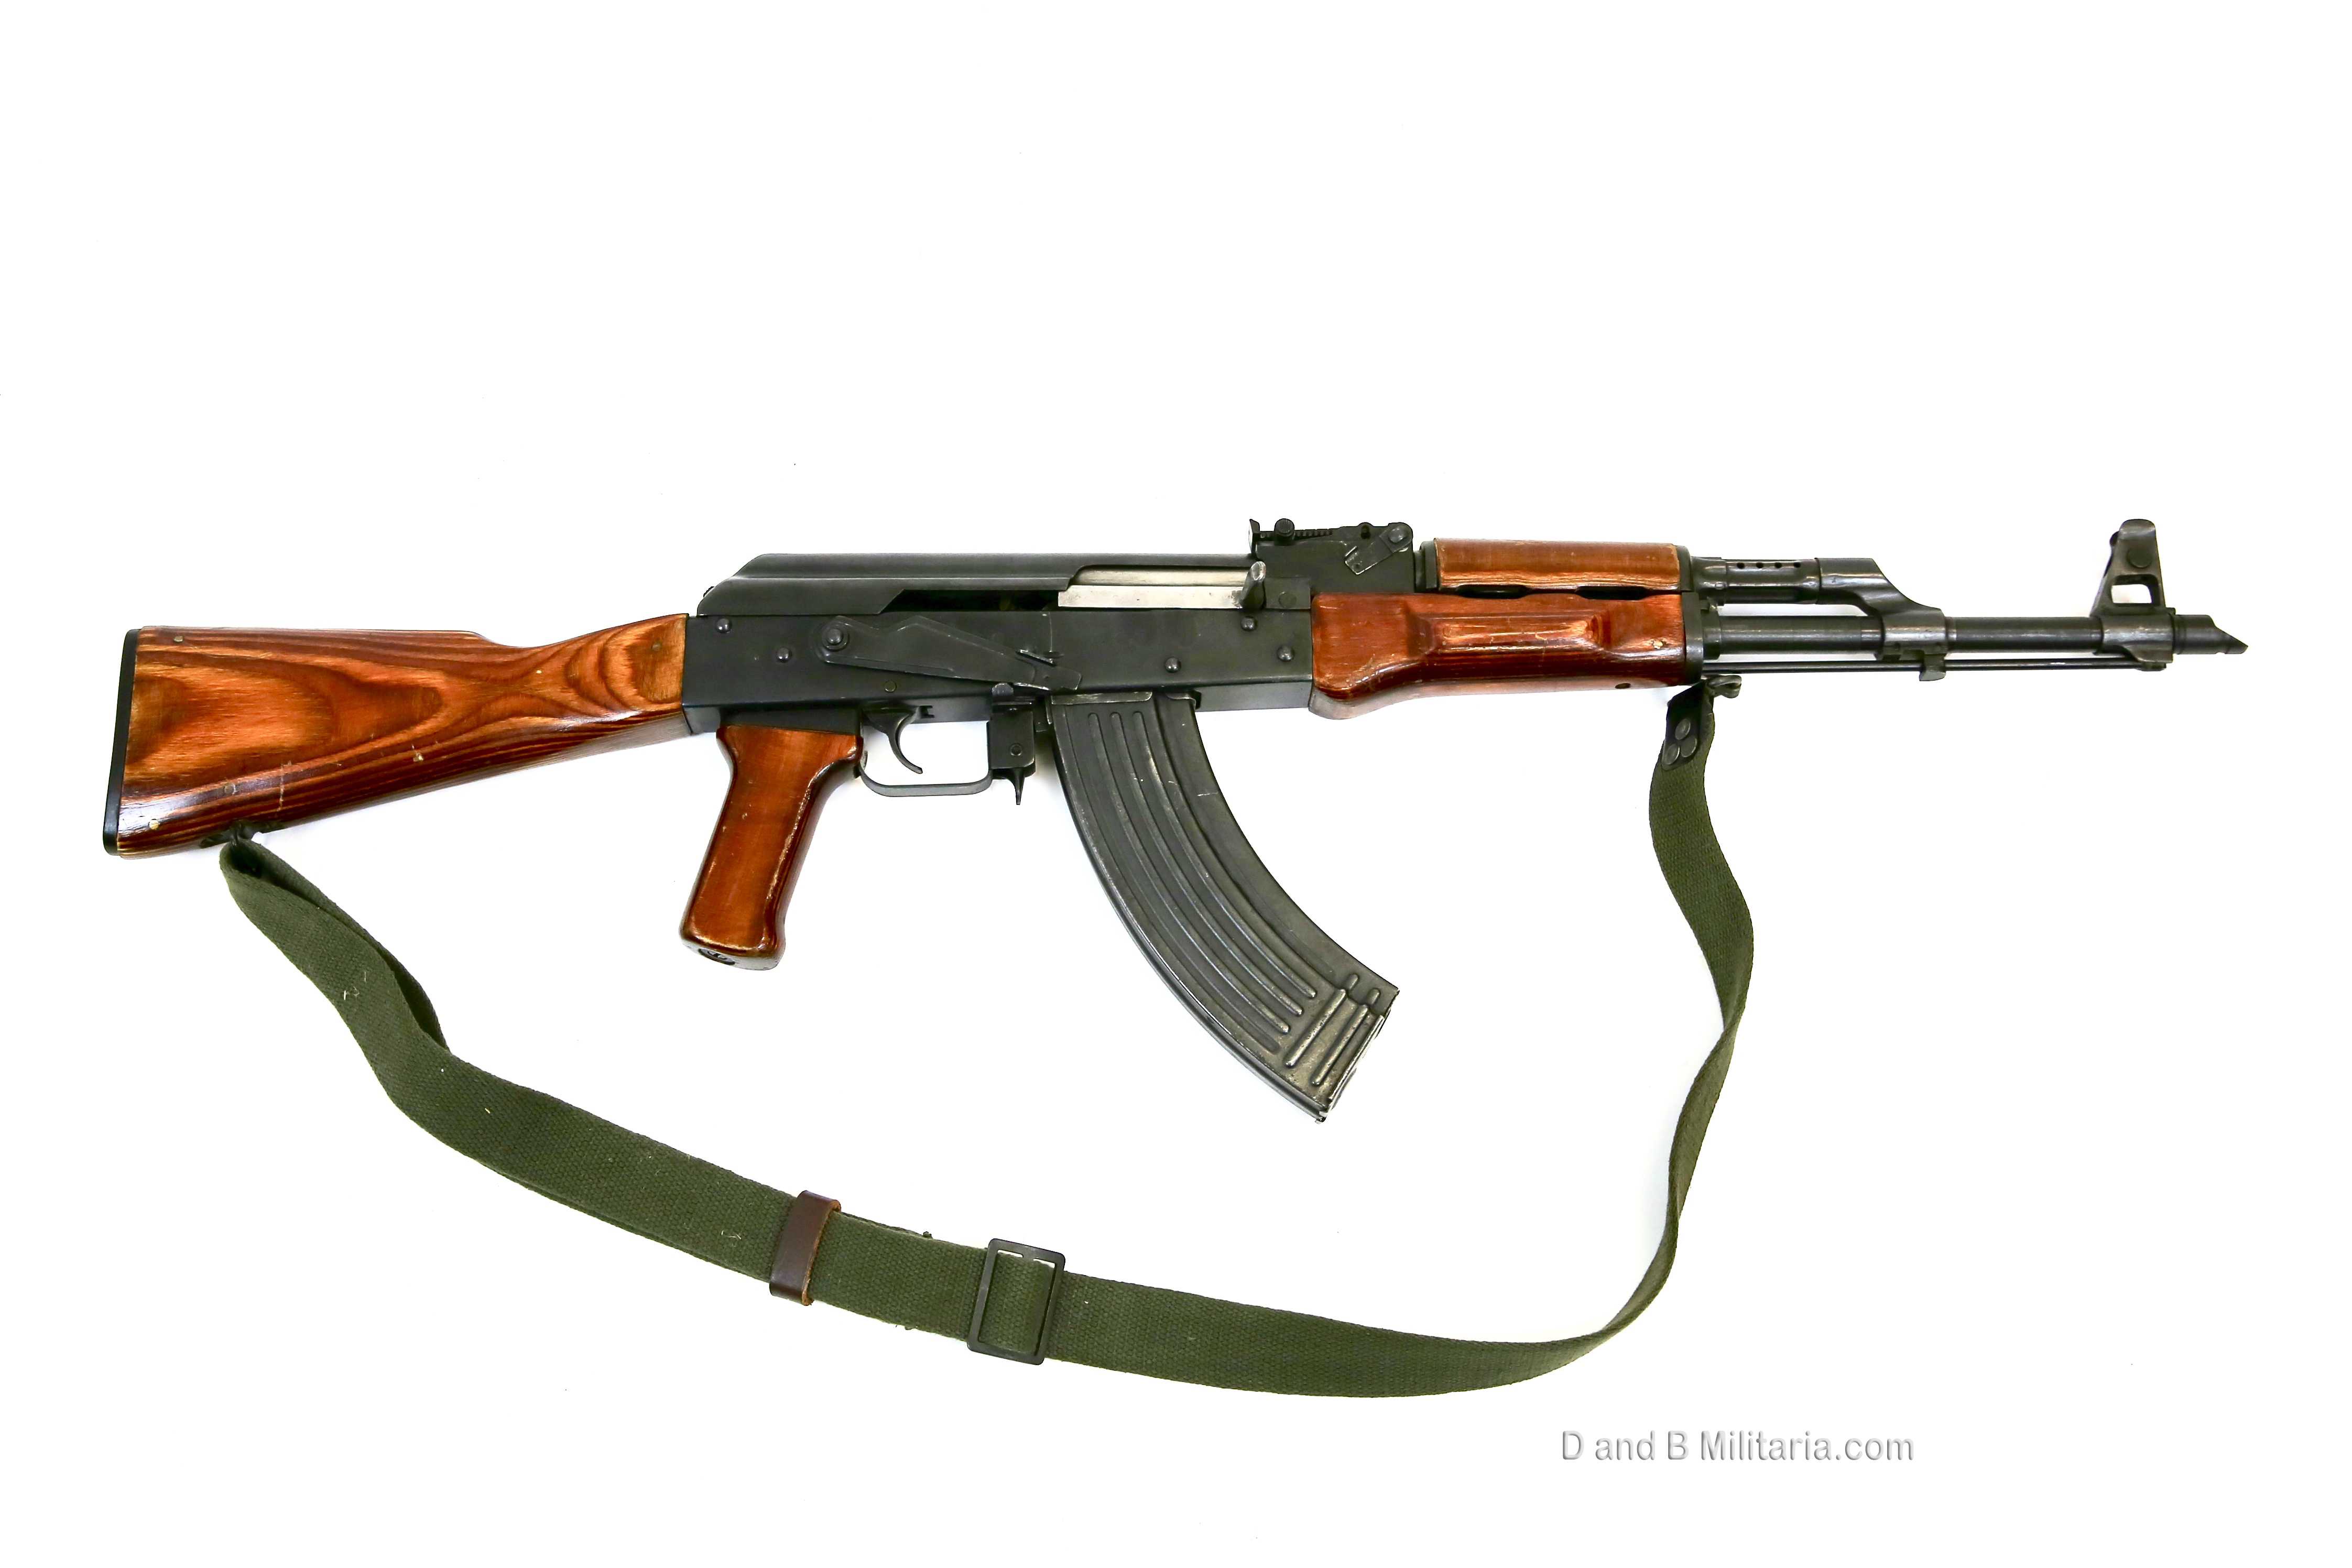 Deactivated Old Spec Vietnamese AKM Assault Rifle